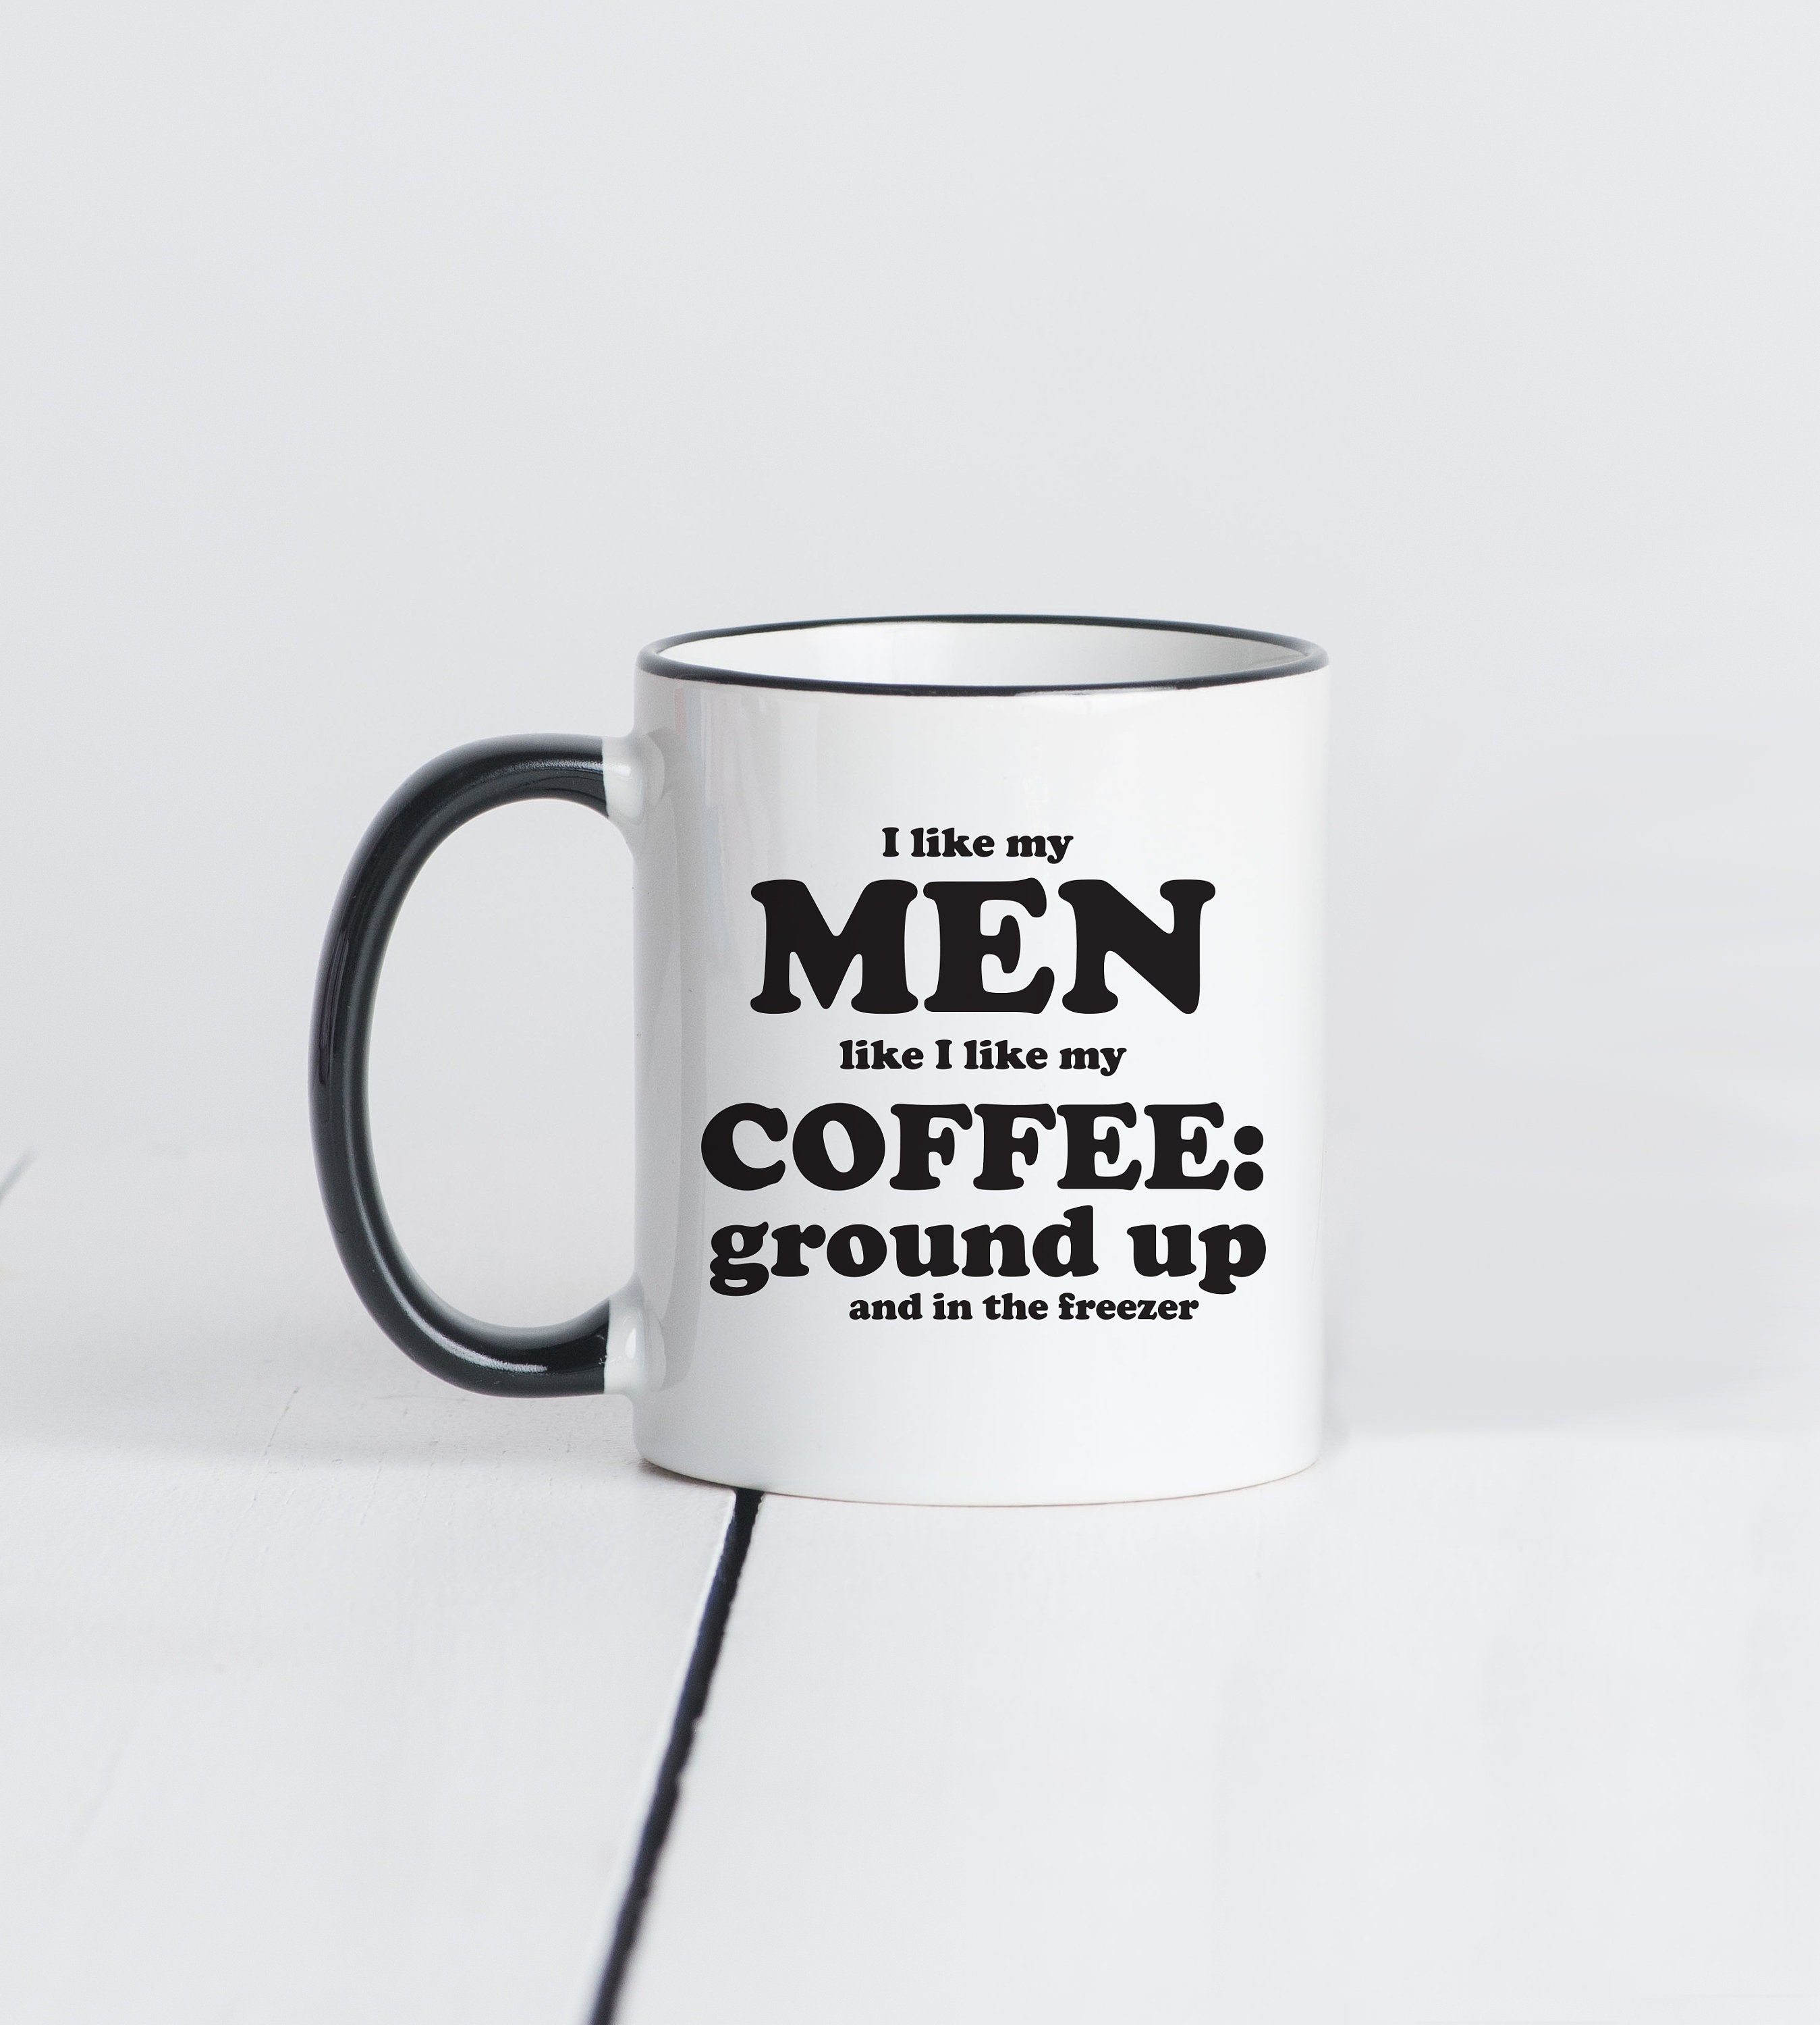 I Like My Coffee BlackLike My Men Mug - Mantra Mugs